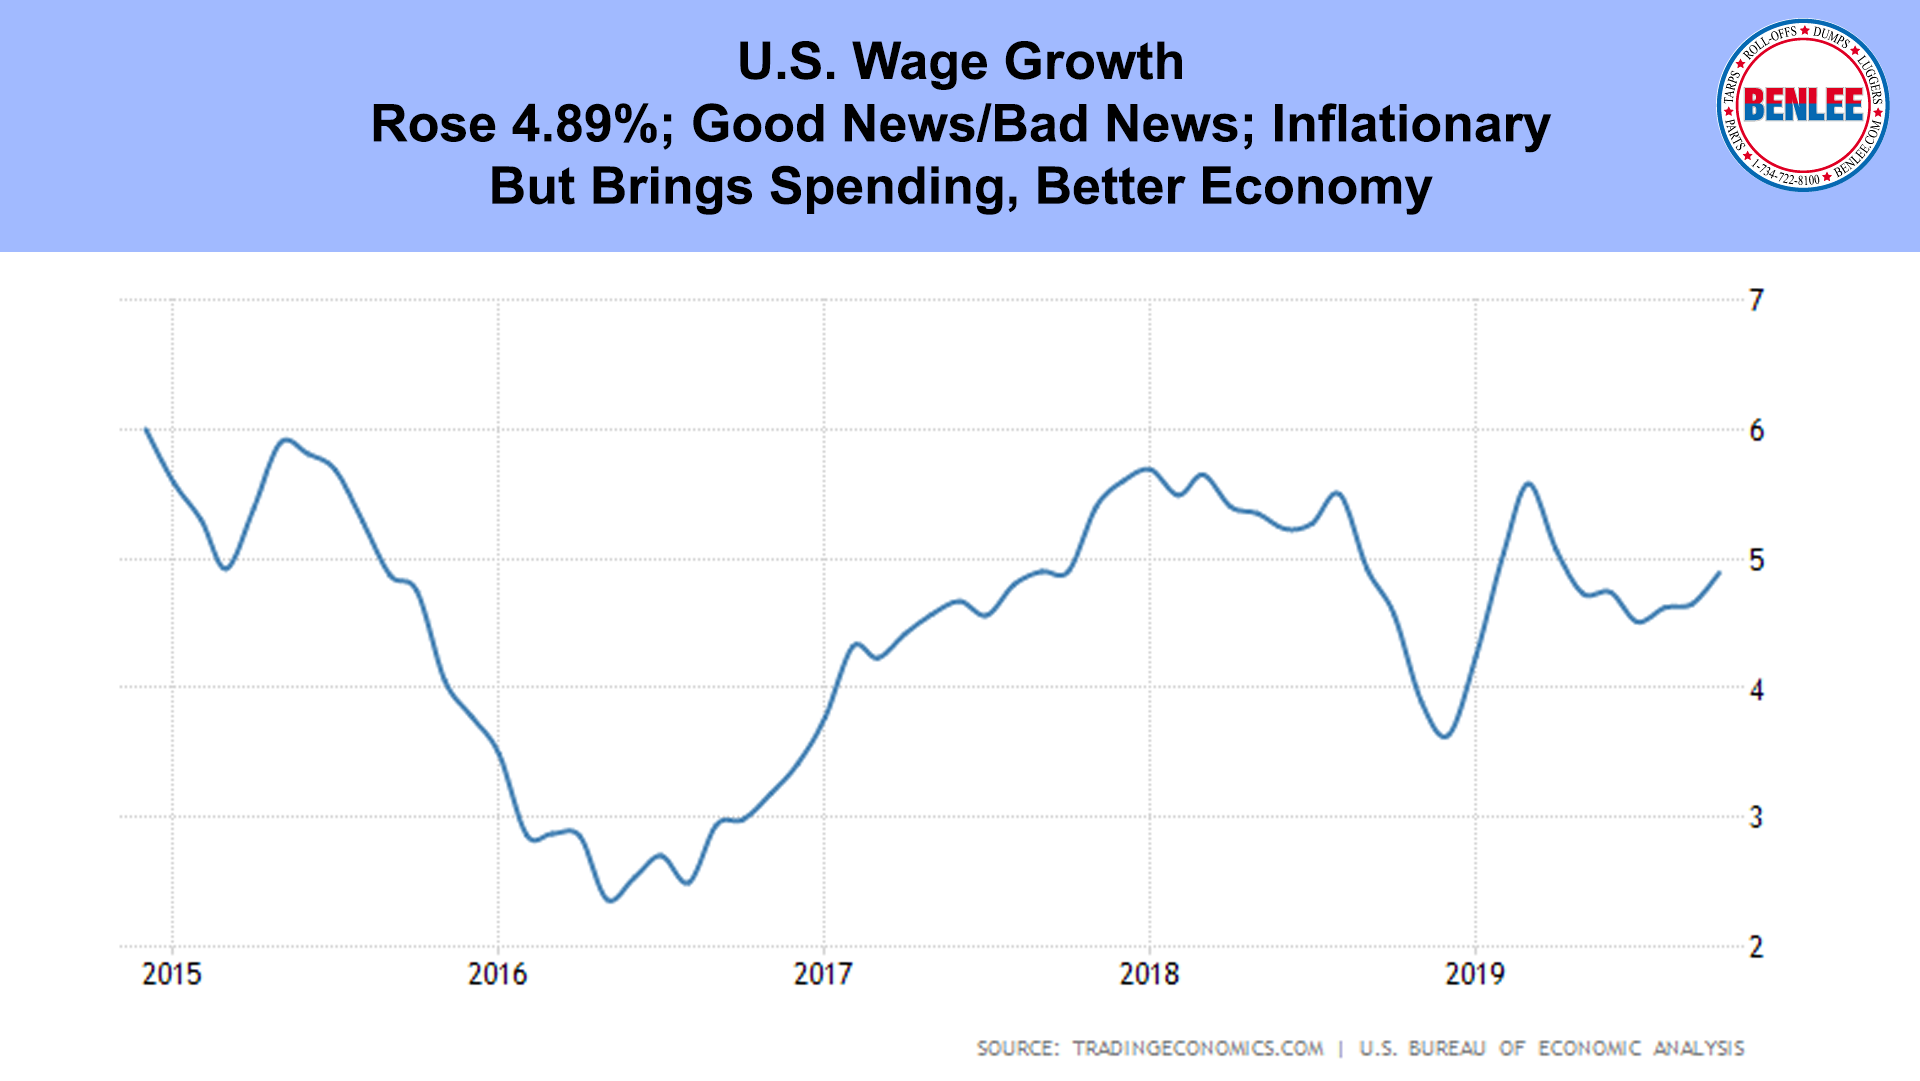 U.S. Wage Growth